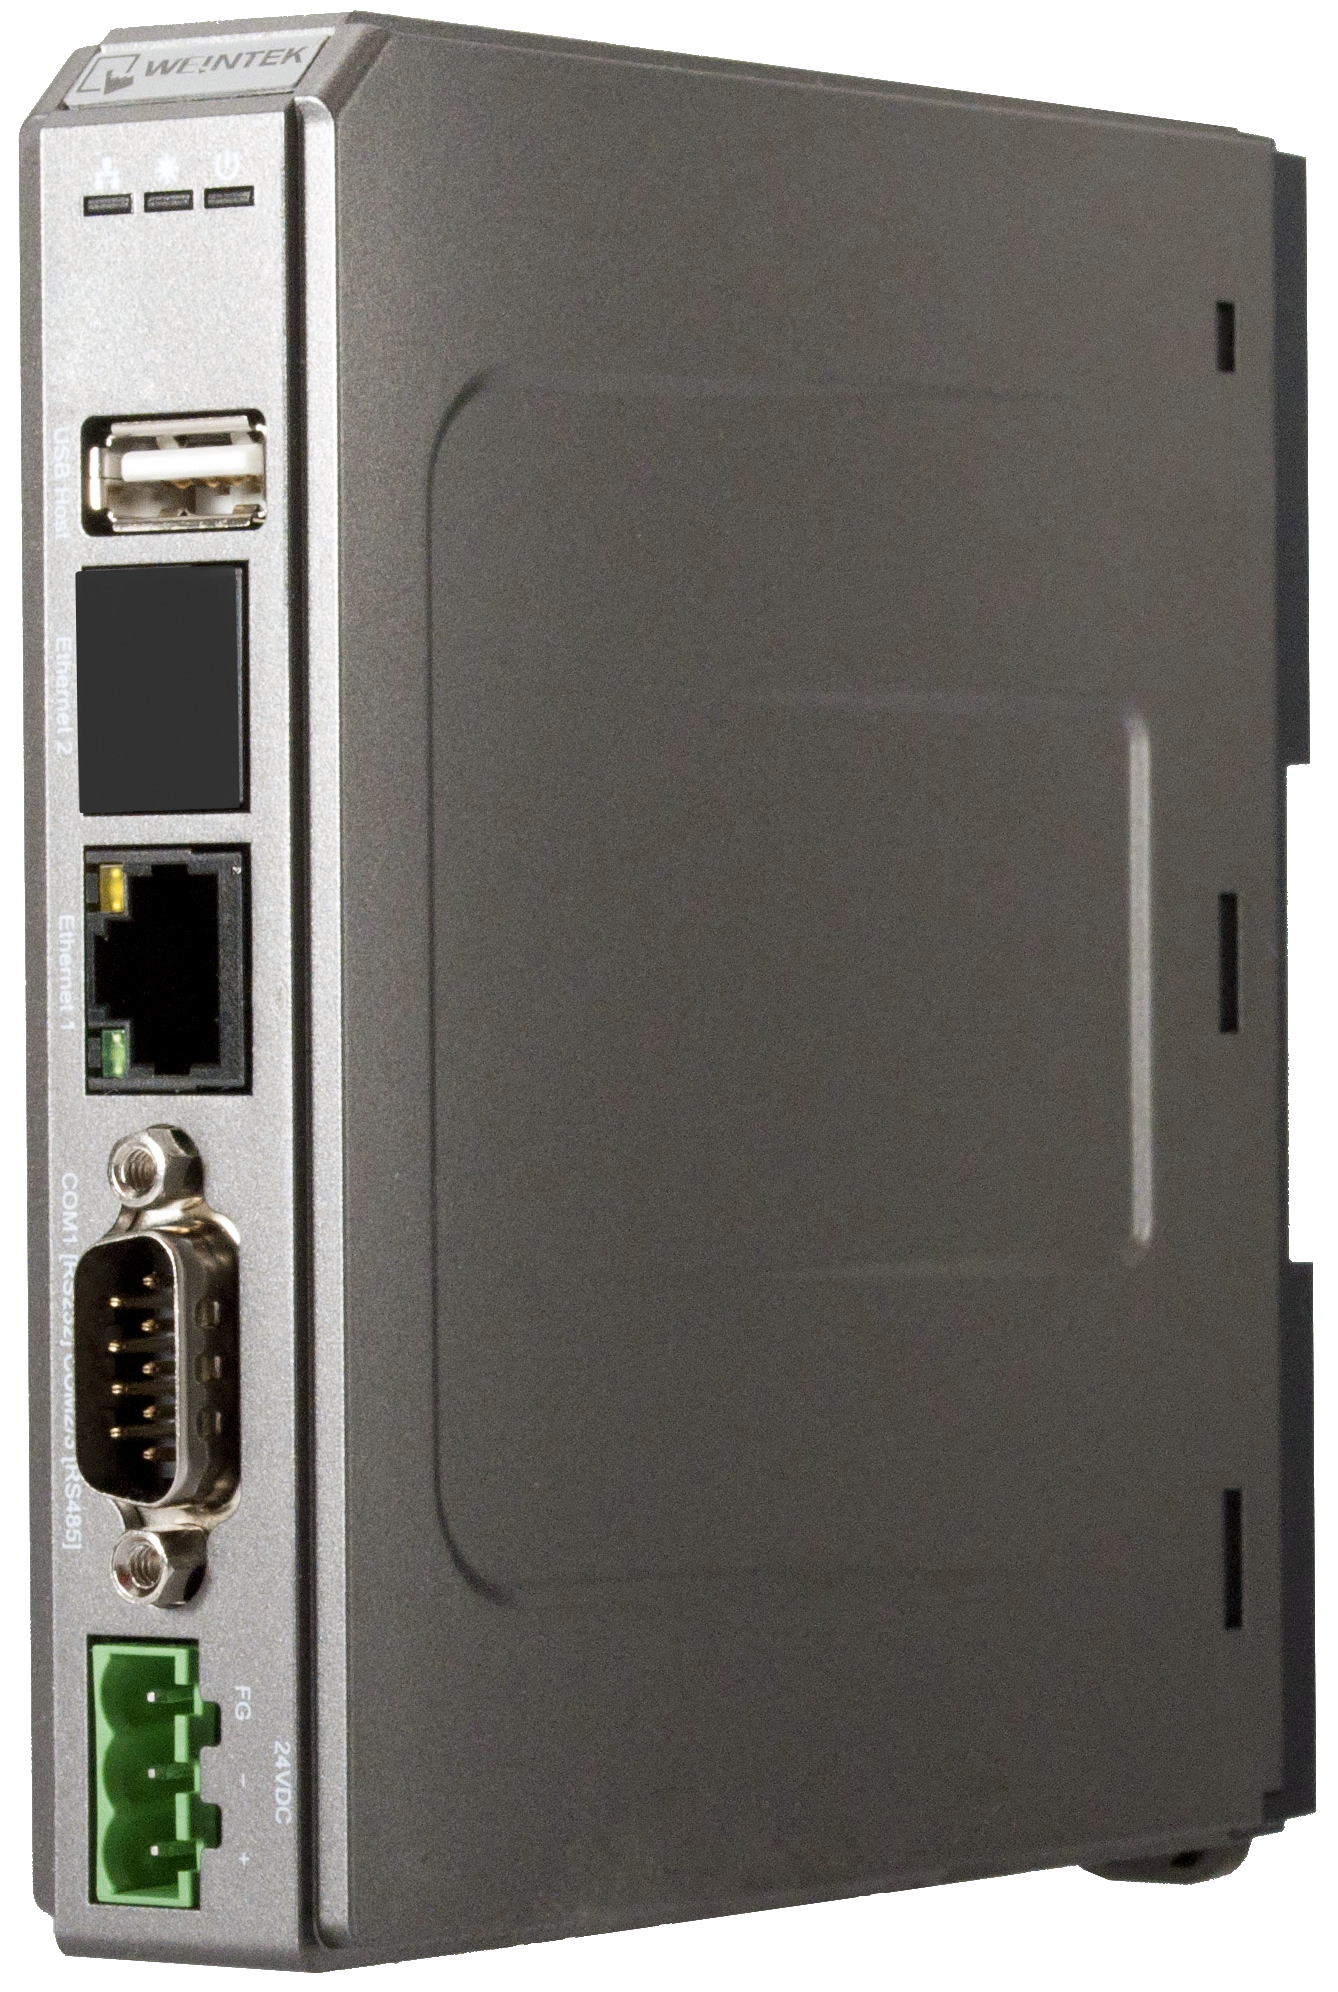 weintek cloud HMI RMI5001 Rohtek KEP with UL certificate, 600 MHz CPU HDMI Output and Ethernet ports 